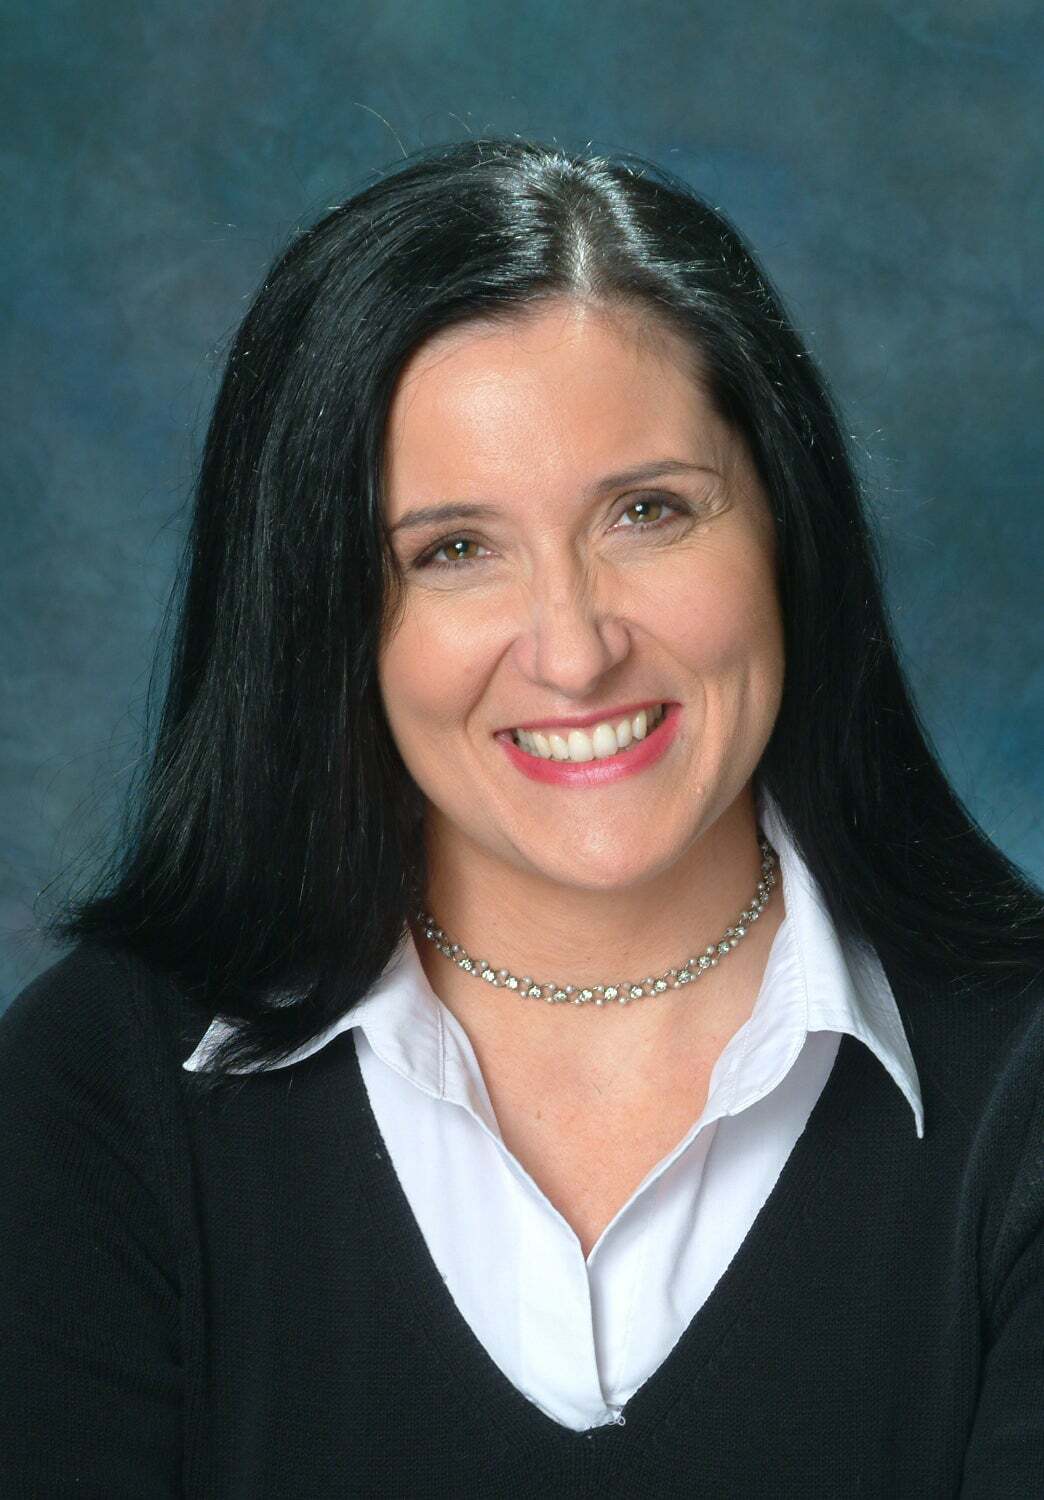 Katrina Costa, Real Estate Salesperson in Bakersfield, Preferred, Realtors